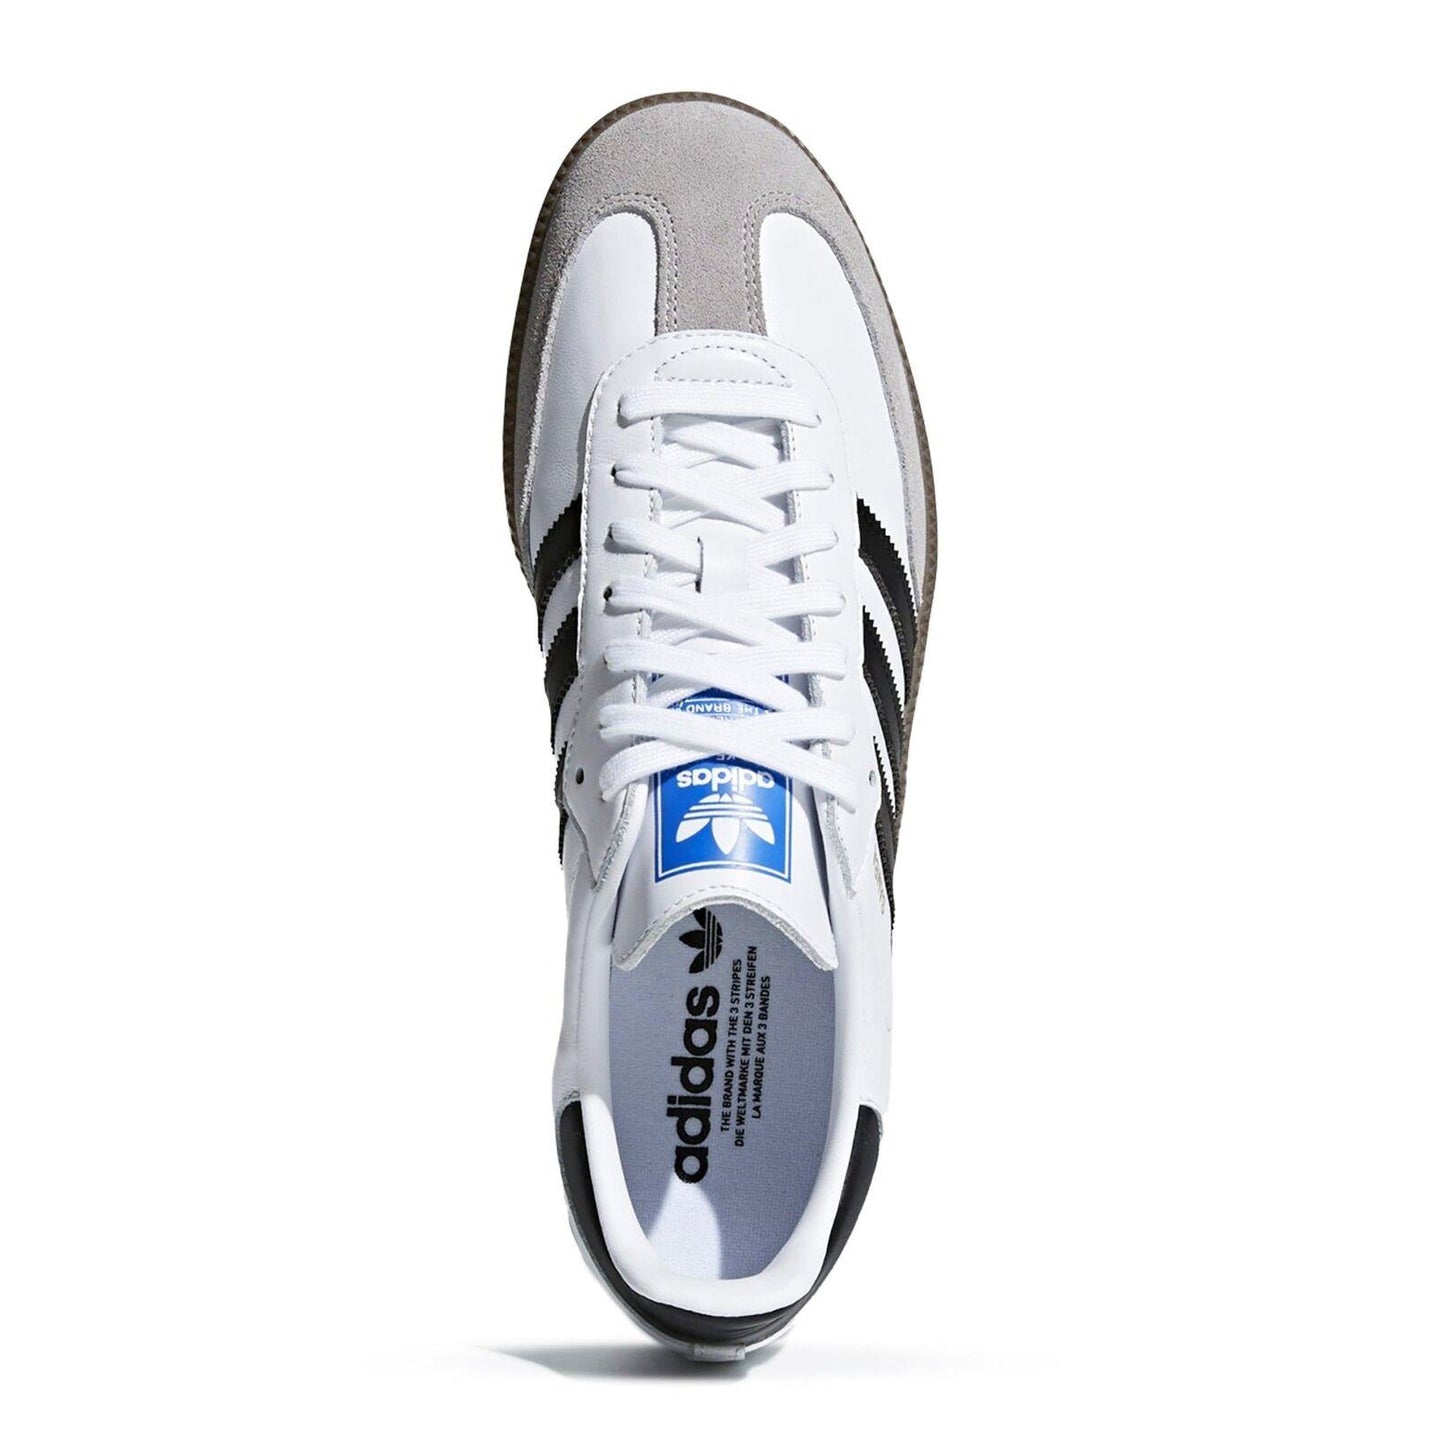 Adidas Originals Samba OG B75806 Trainers Cloud White/Core Black/Clear Granite UK 8-11